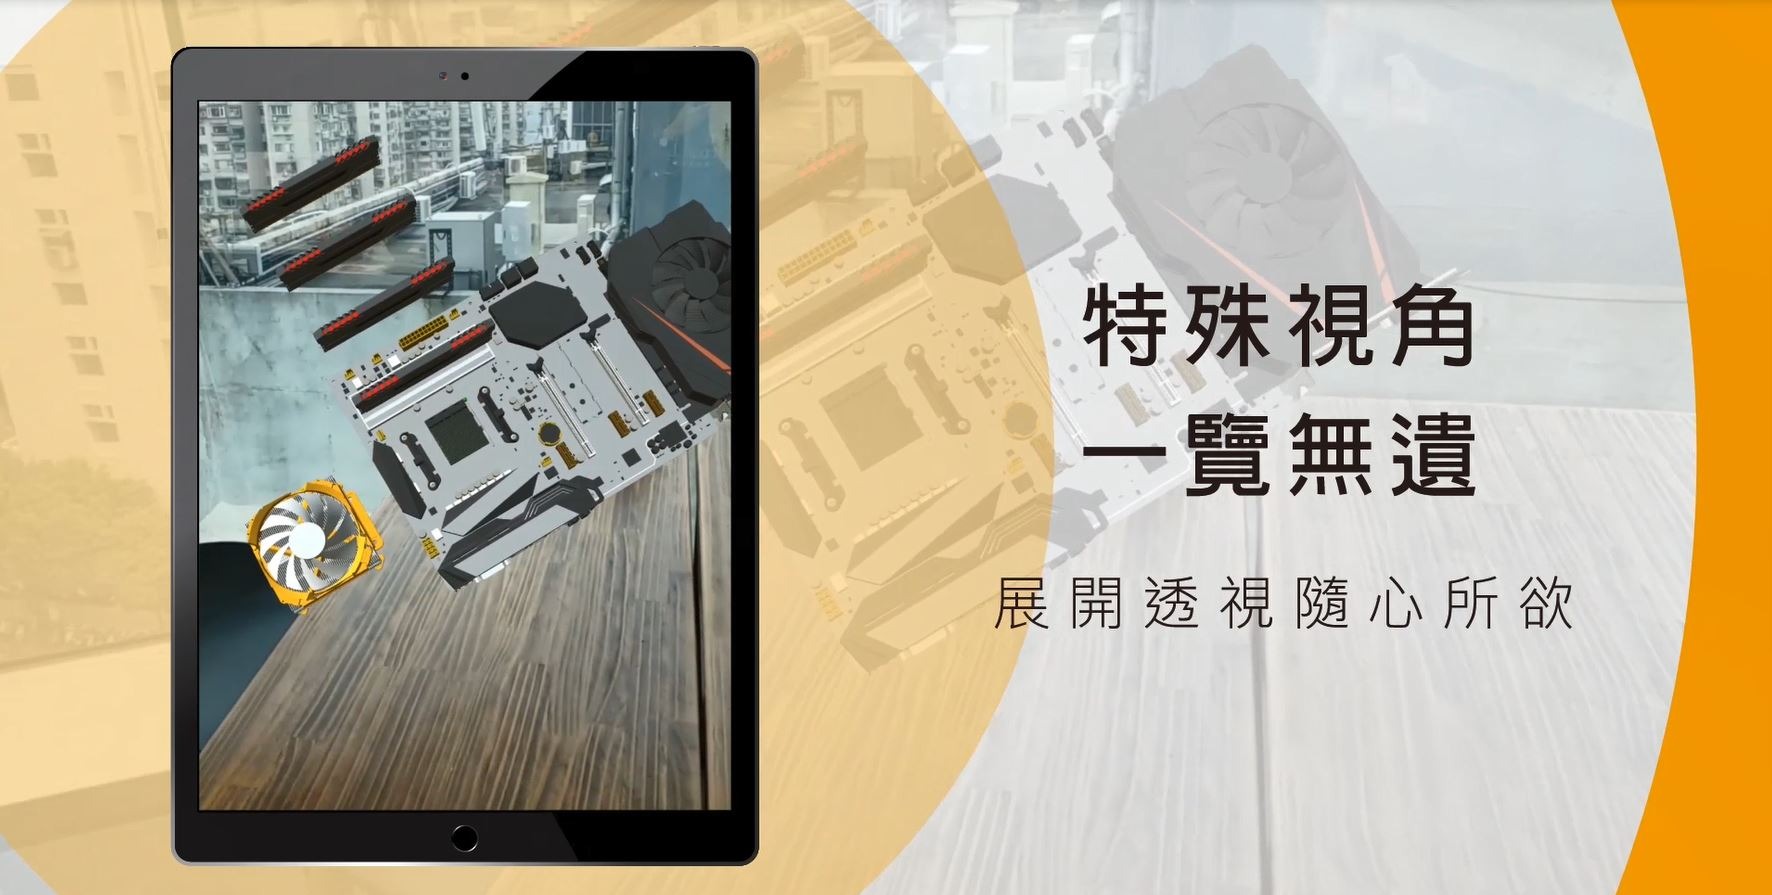 Consumer experience augmented reality AR AR application